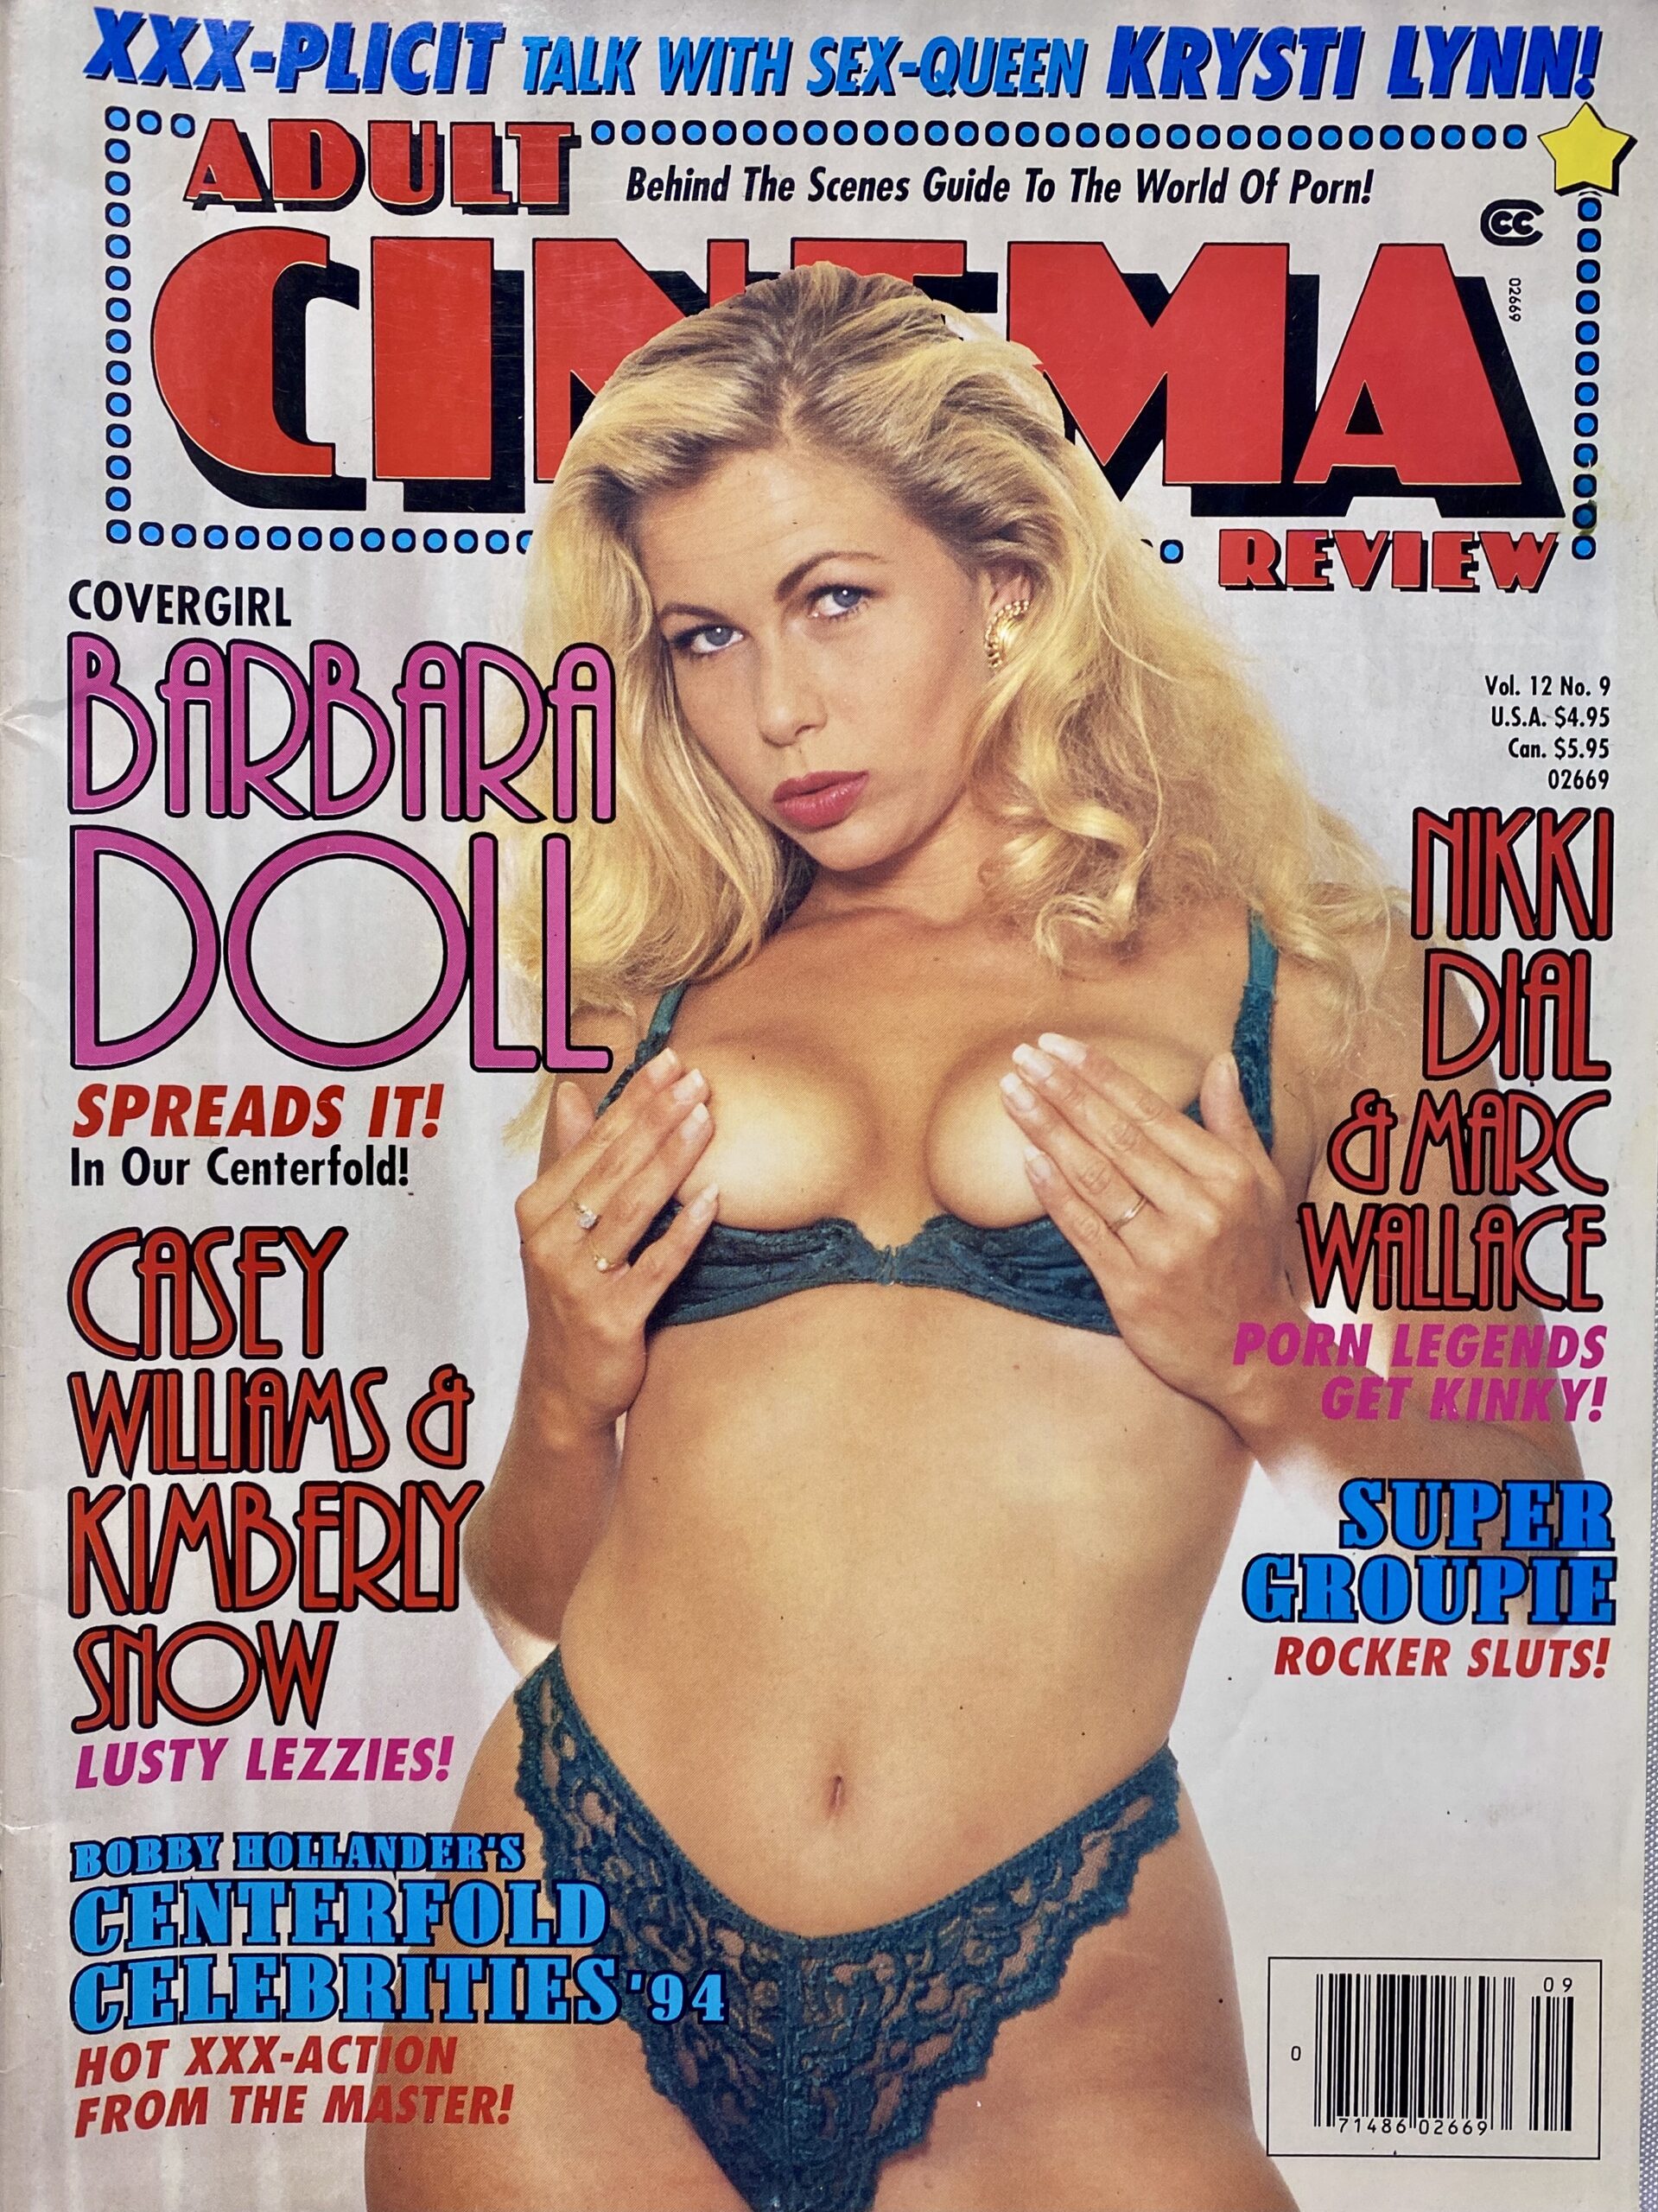 90s porn magazine